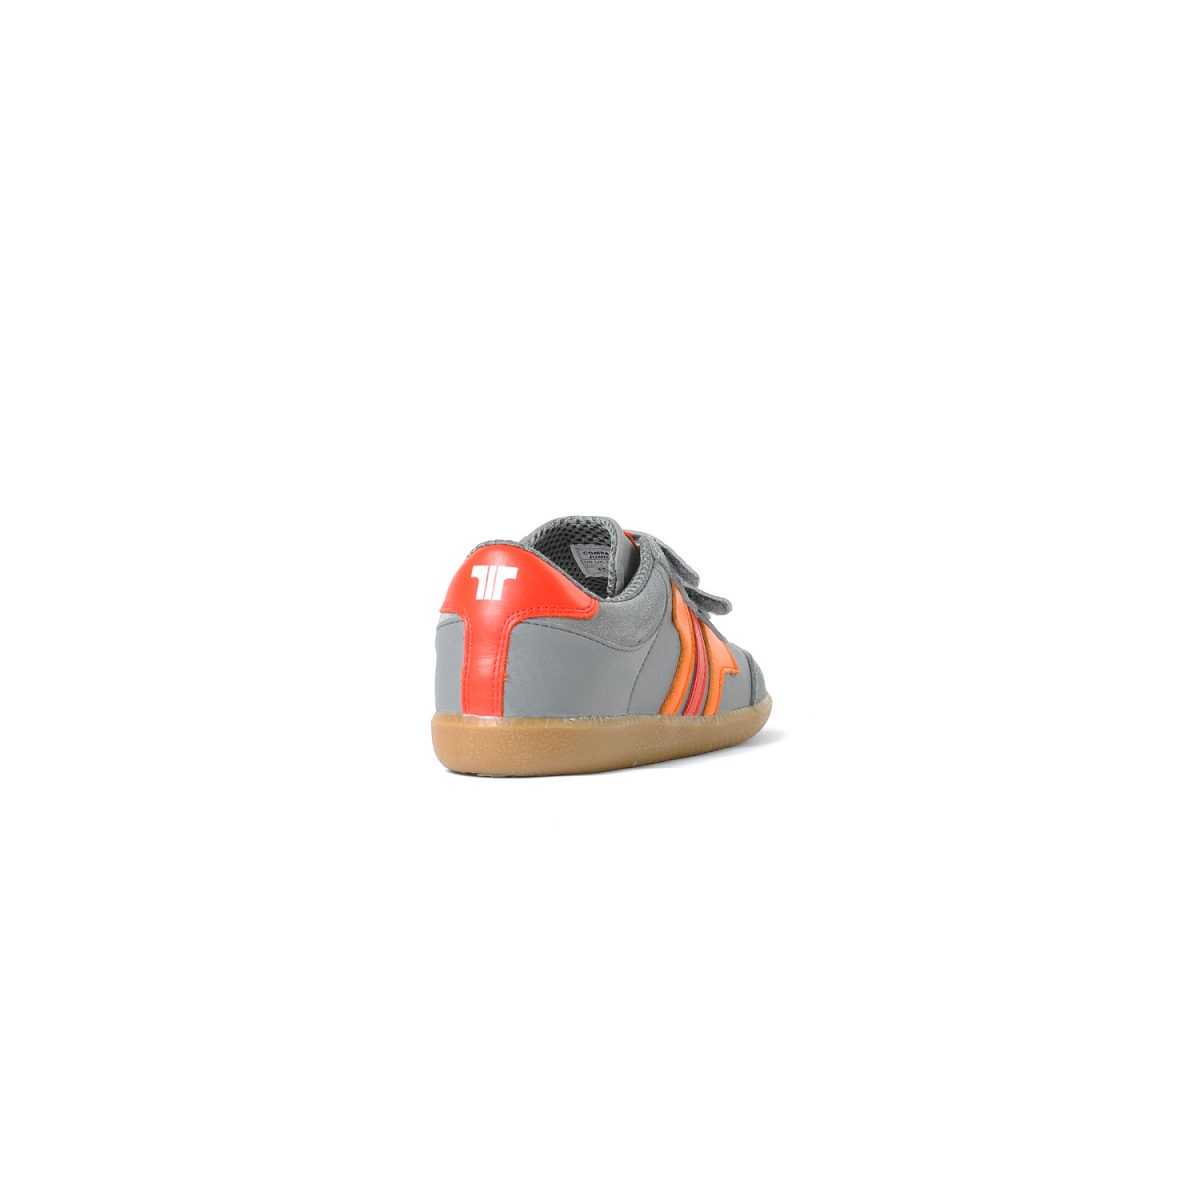 Tisza shoes - Junior - Grey-orange-red